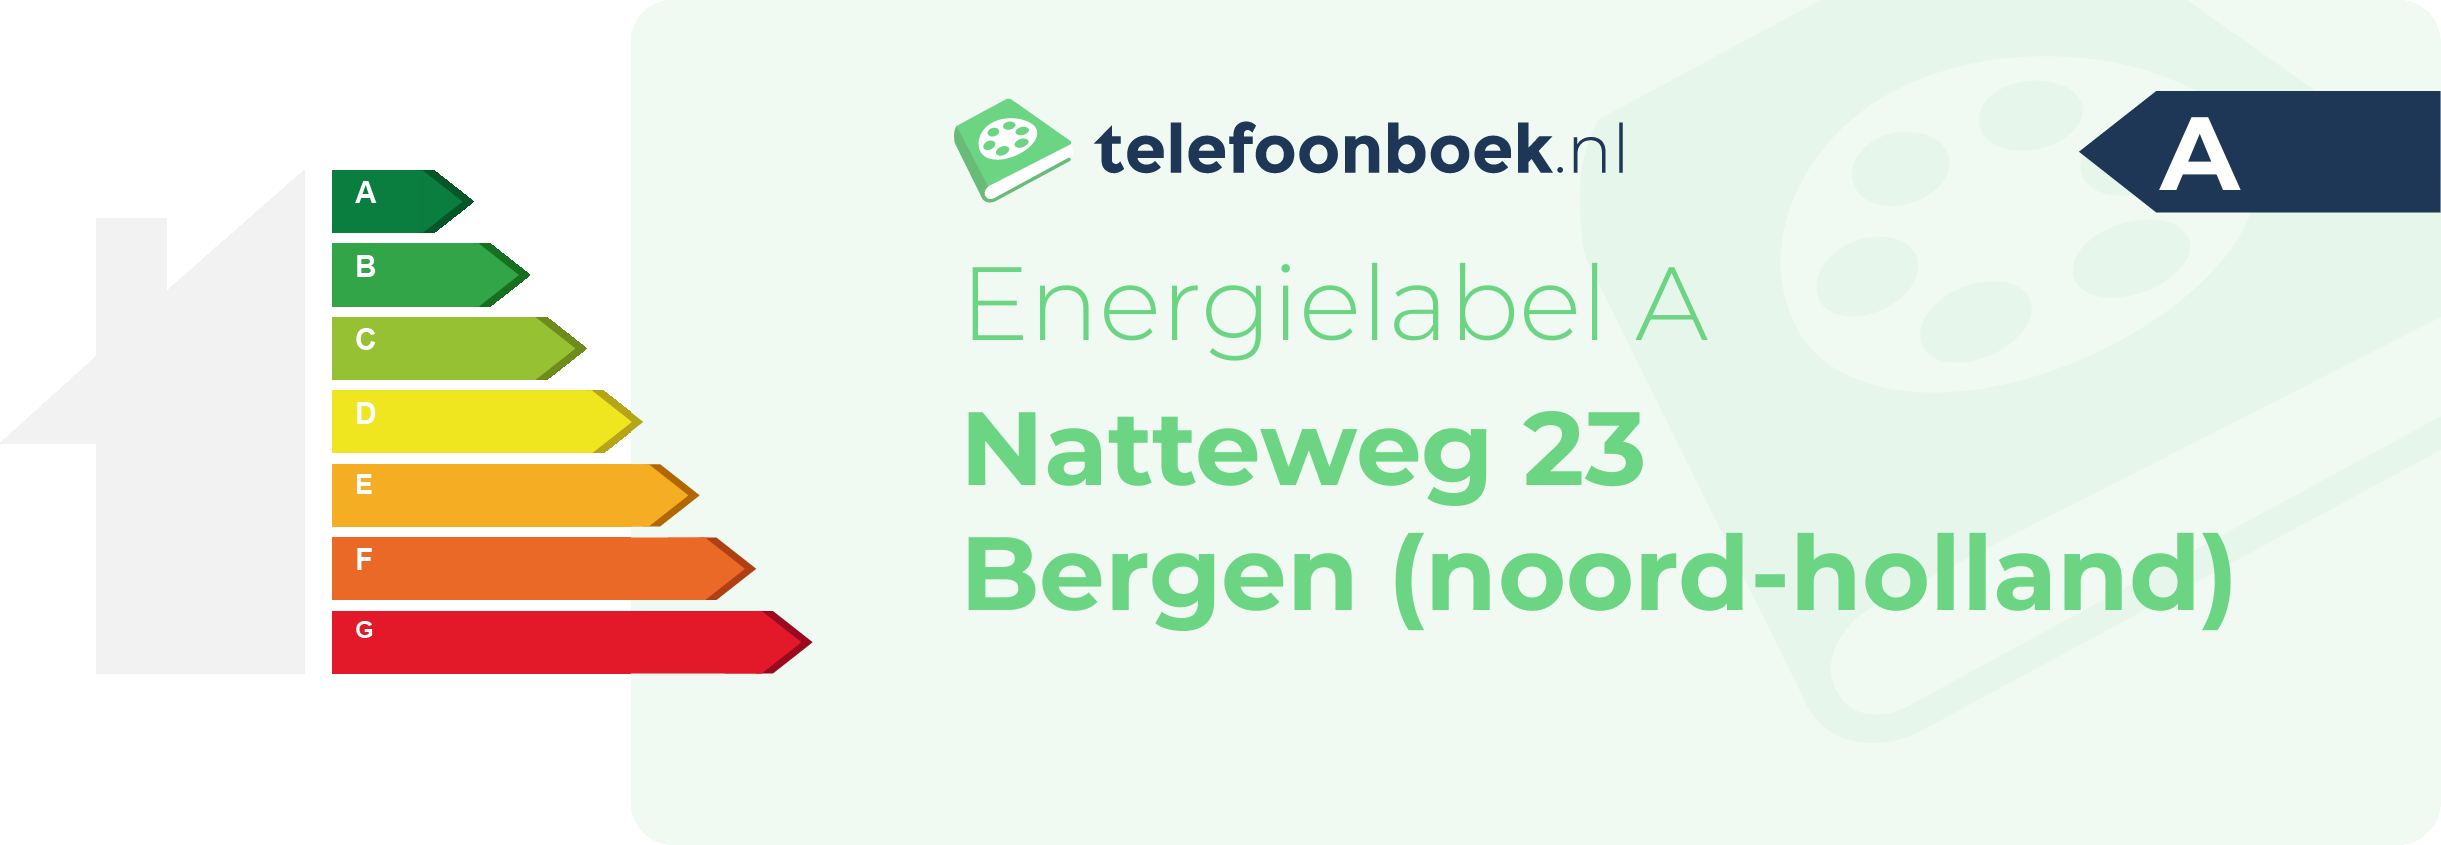 Energielabel Natteweg 23 Bergen (Noord-Holland)